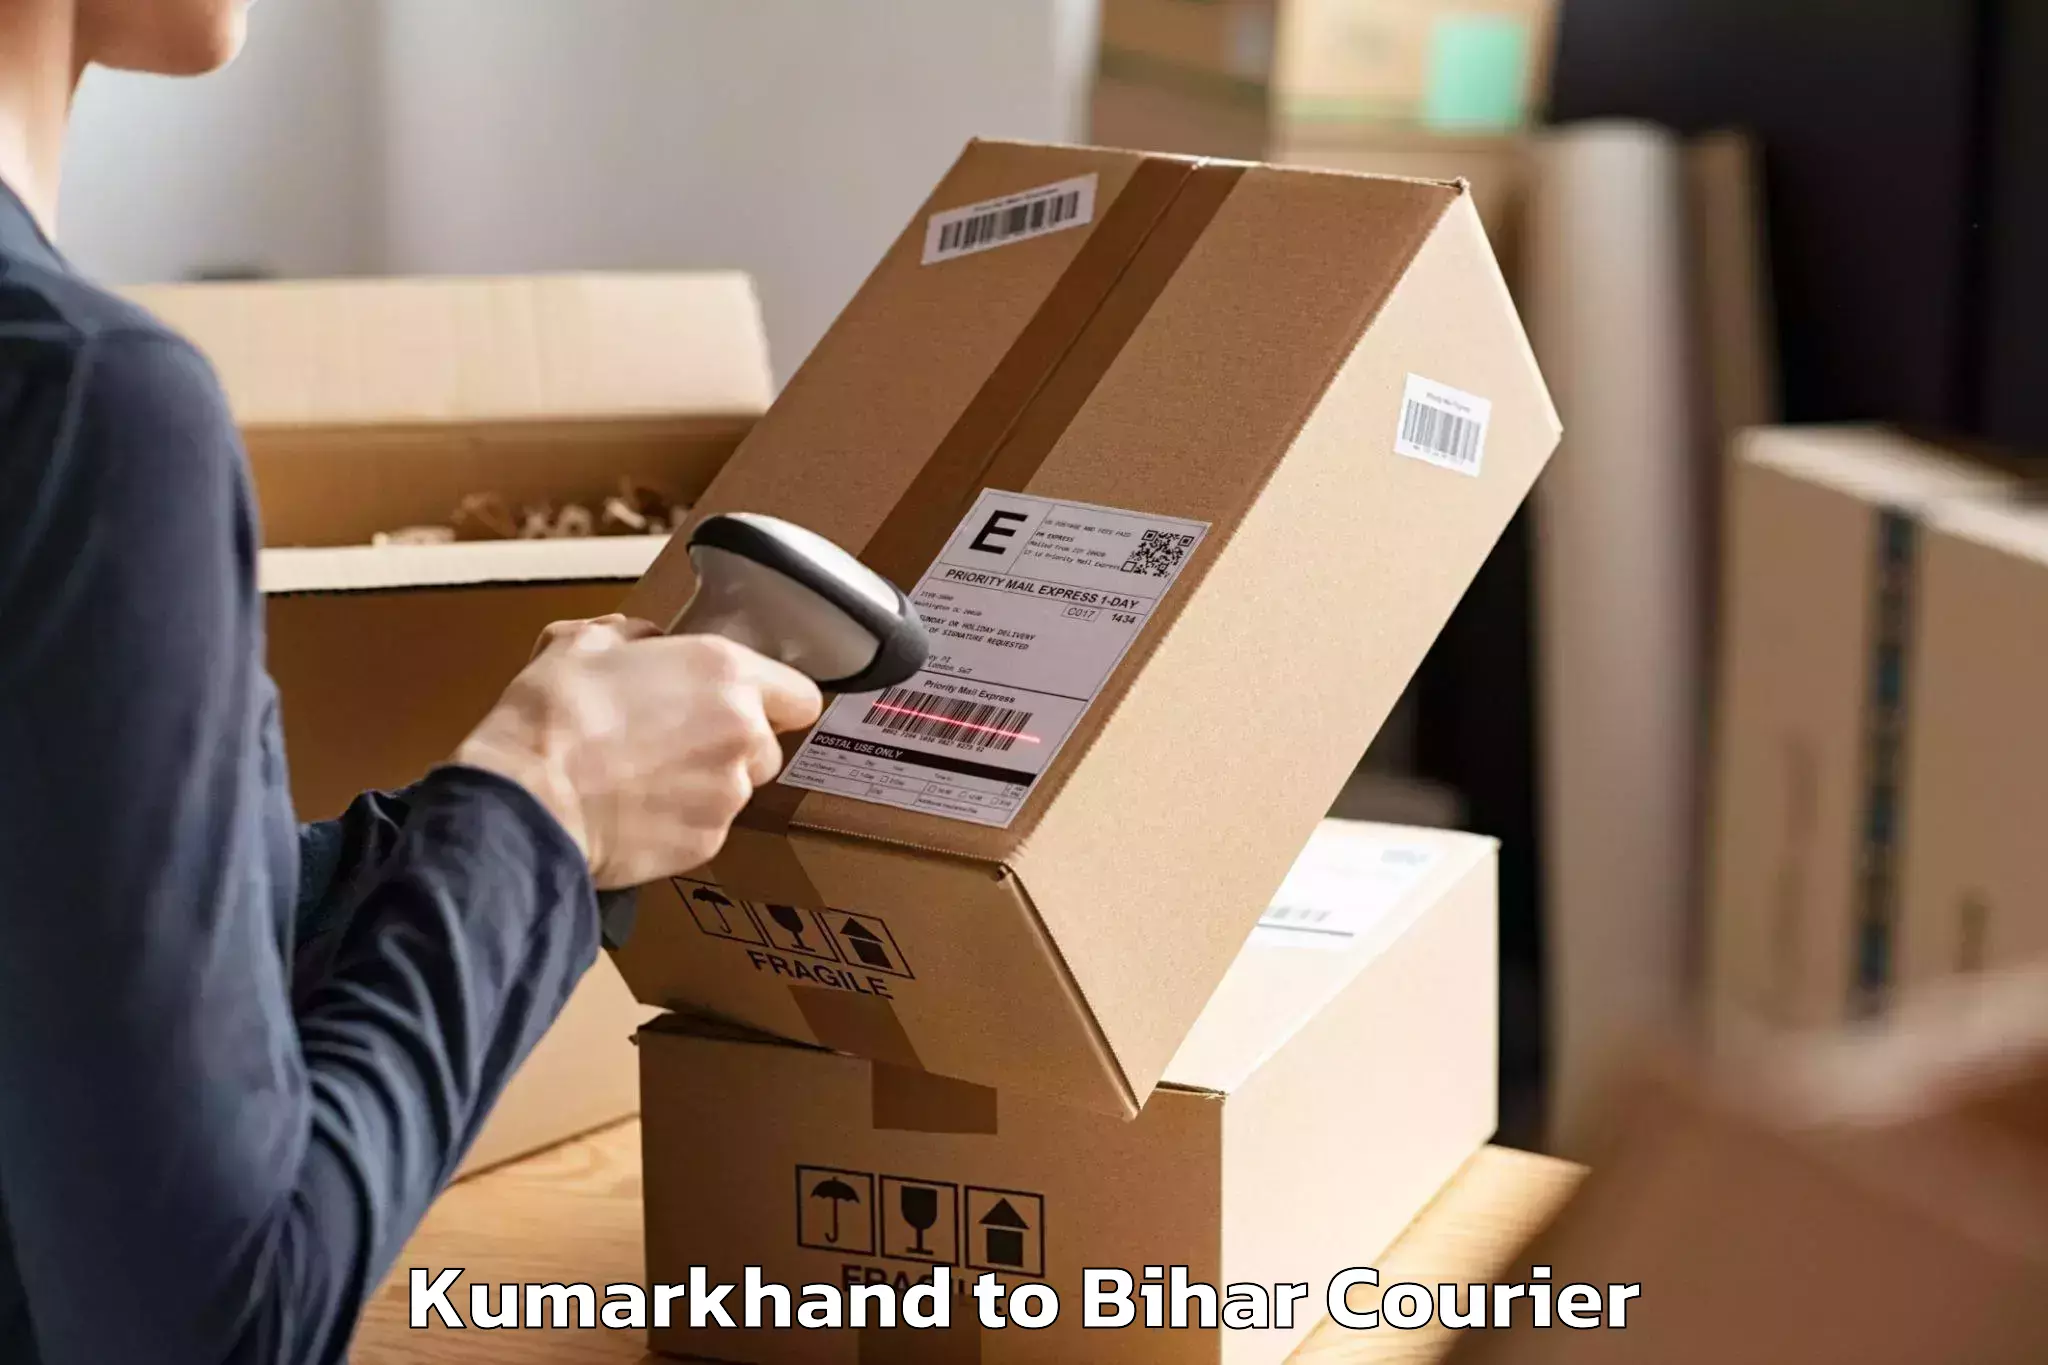 Full-service movers Kumarkhand to Bikramganj